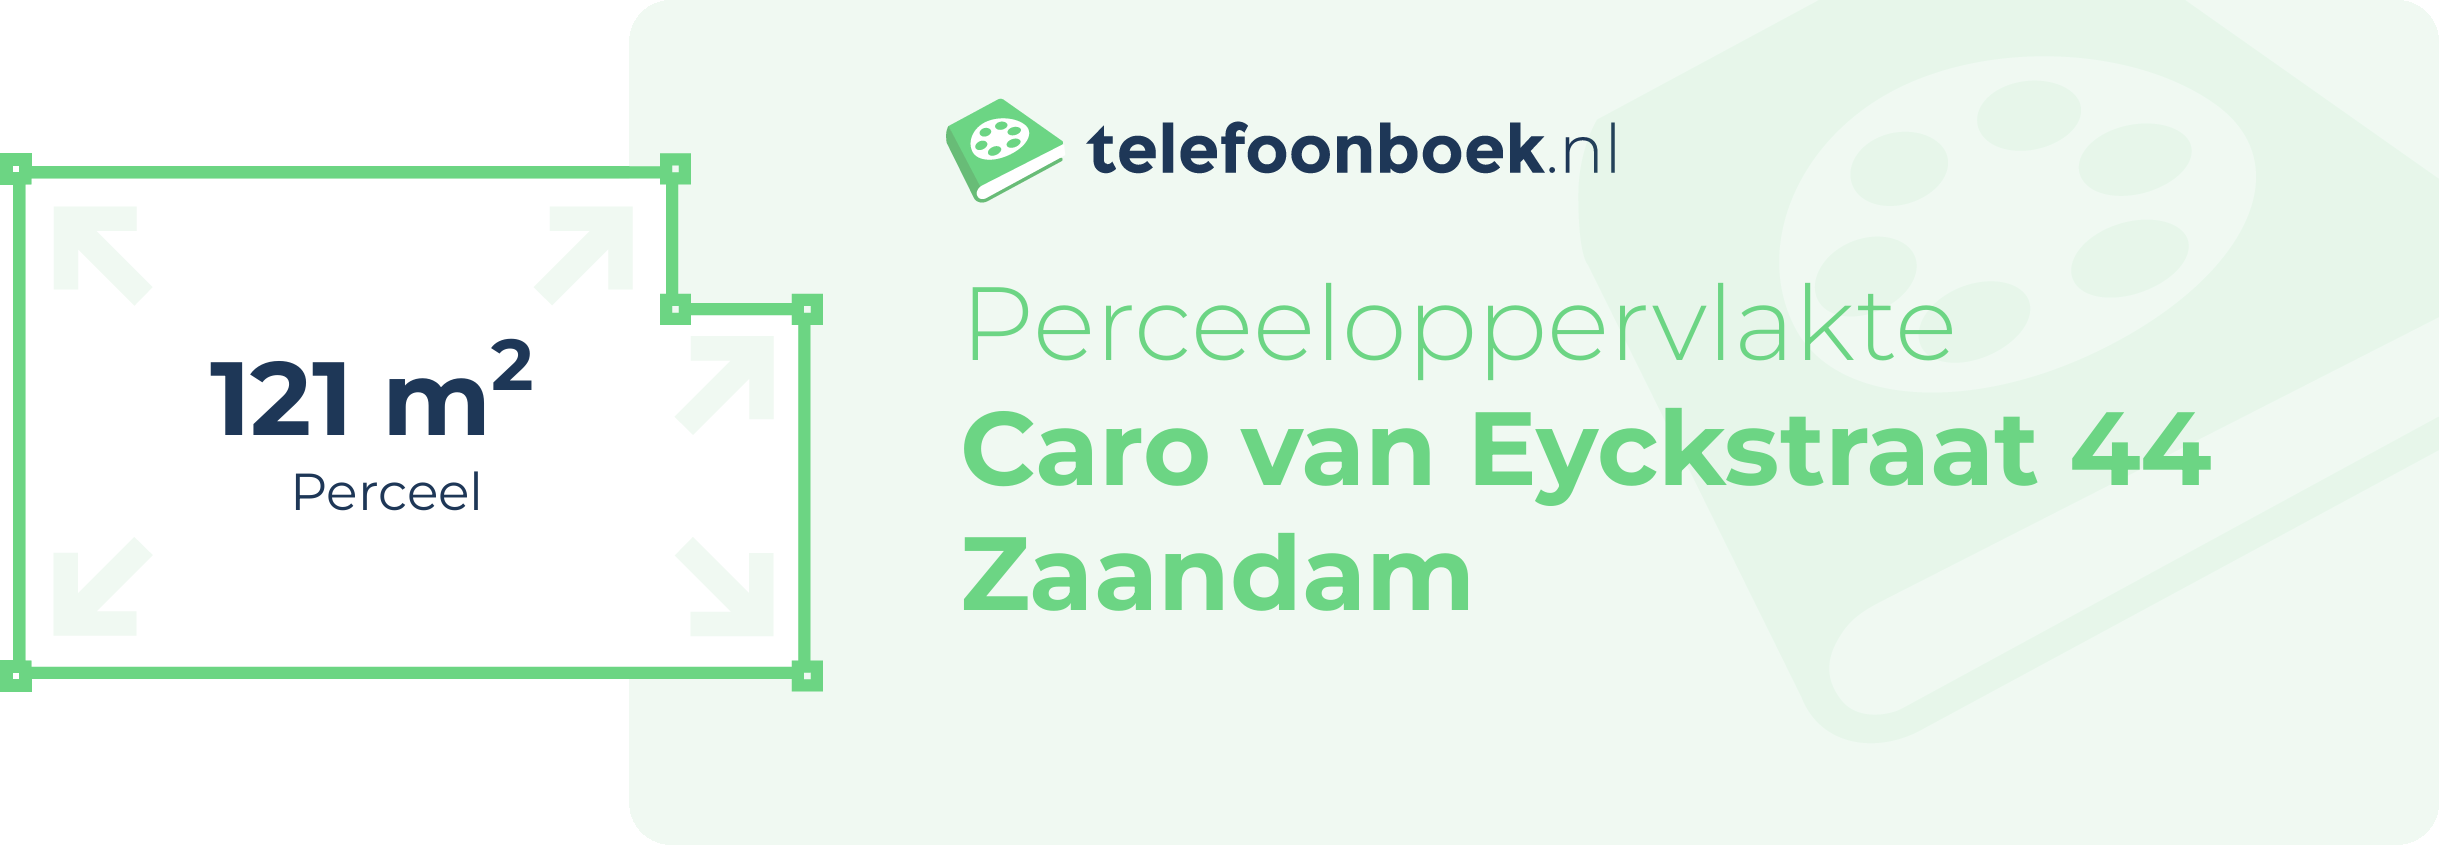 Perceeloppervlakte Caro Van Eyckstraat 44 Zaandam